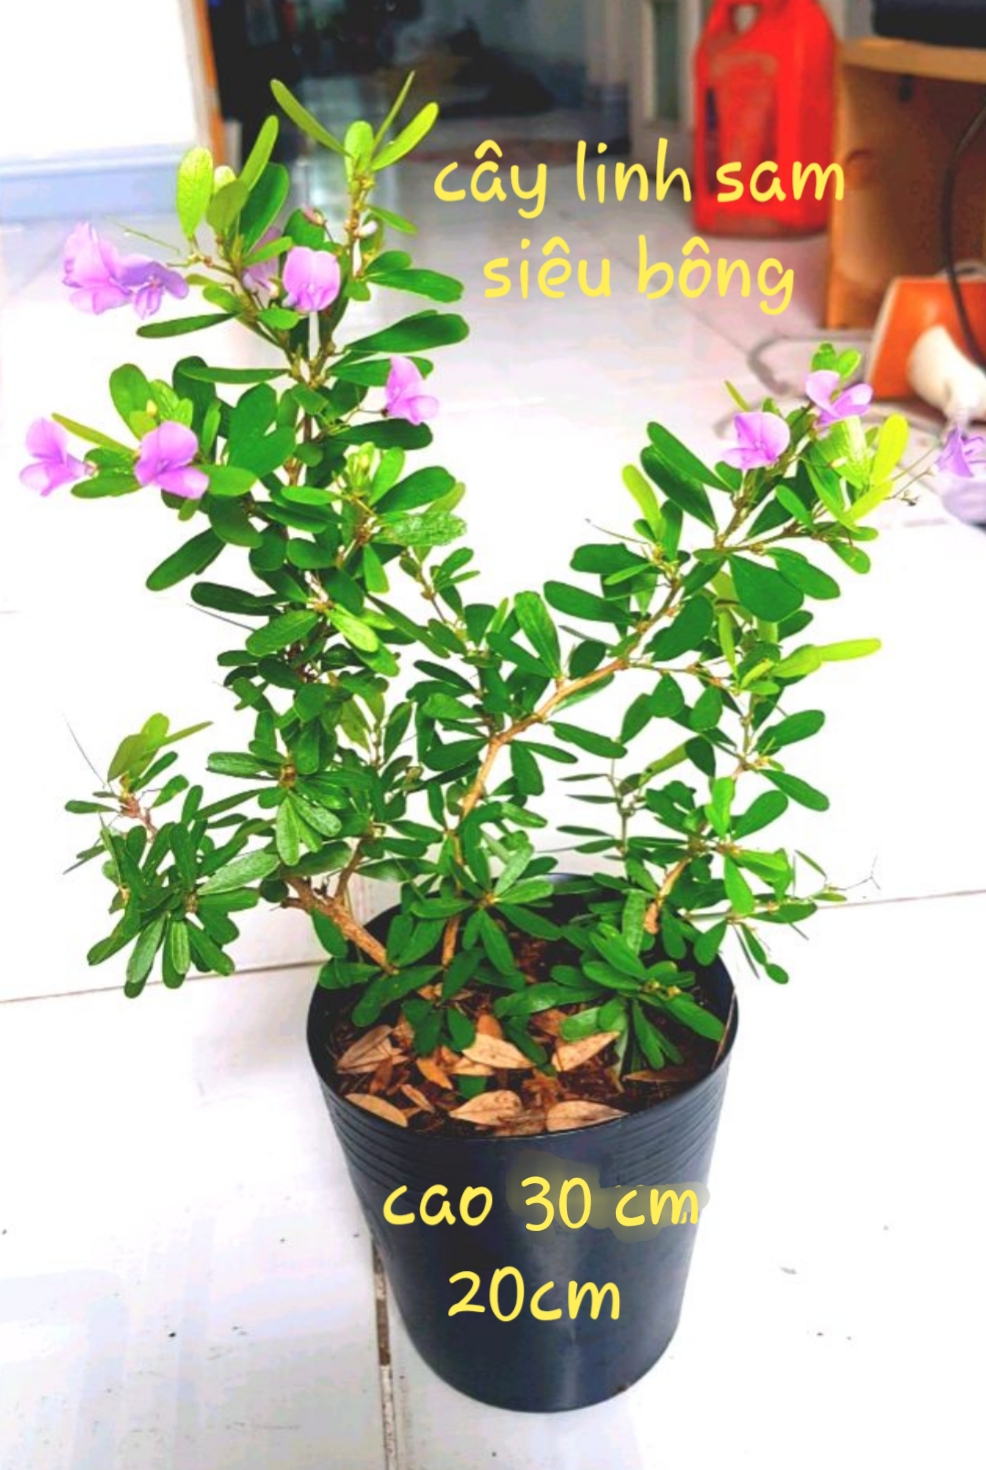 Cây linh sam hoa tím siêu bông, siêu dễ trồng, hoa quanh năm, cao tầm 50cm